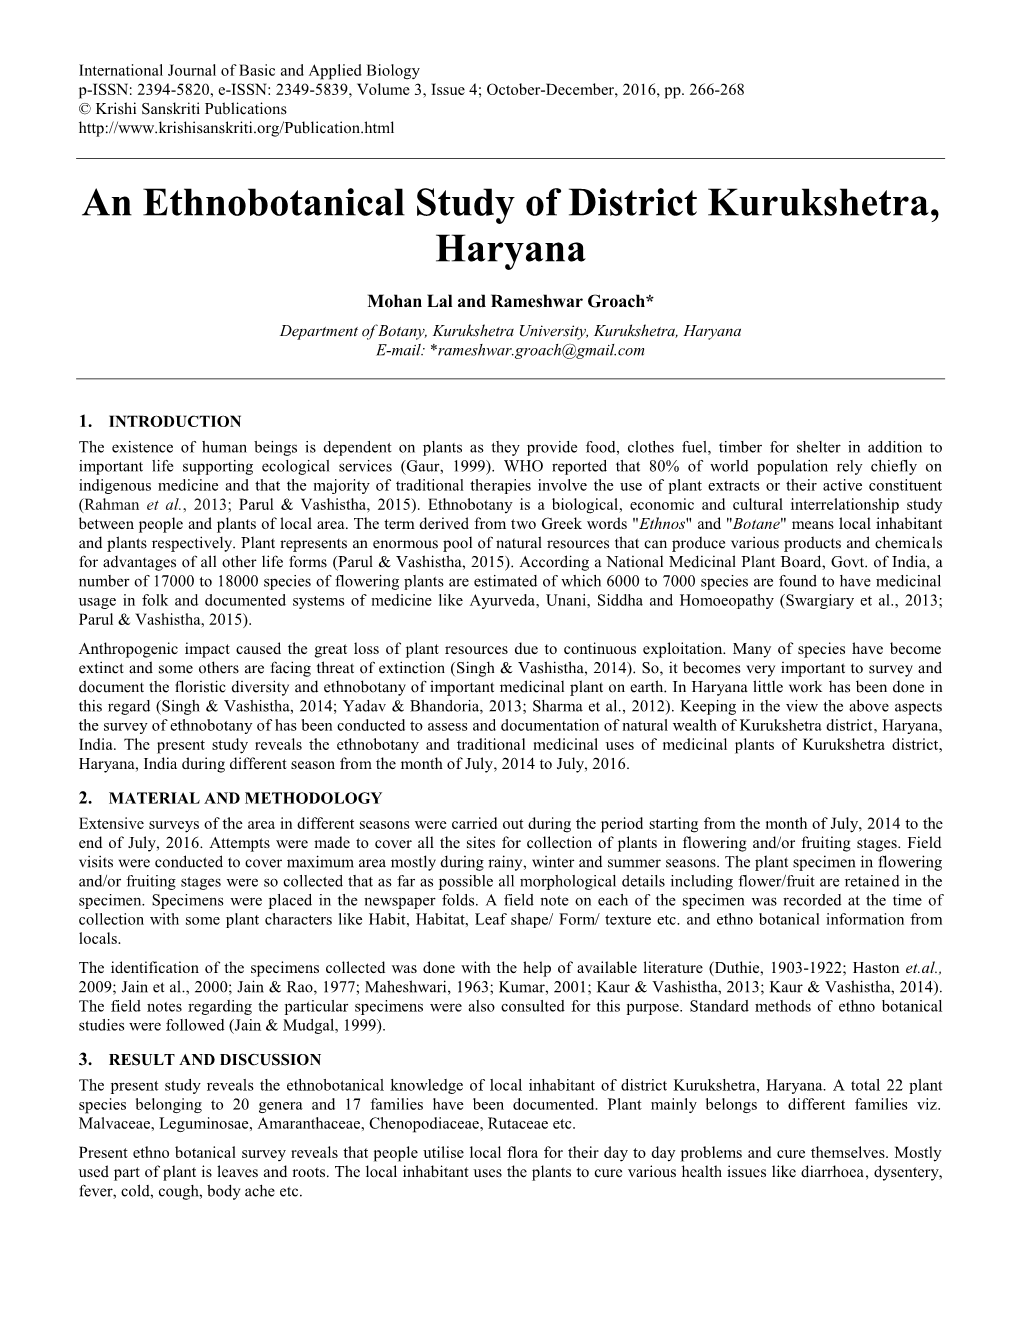 An Ethnobotanical Study of District Kurukshetra, Haryana